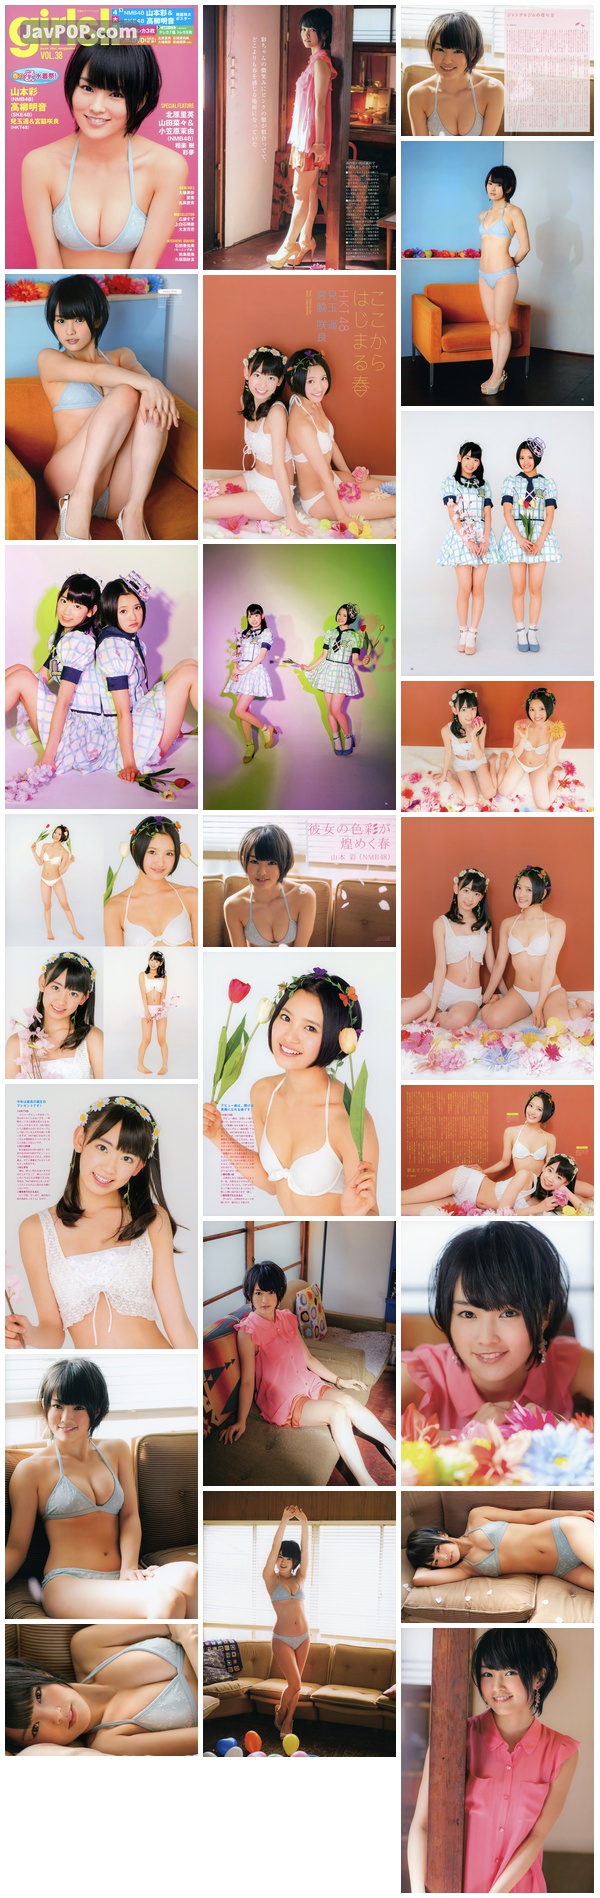 [girls!] Vol.38 Haruka Kodama, Sakura Miyawaki, Sayaka Yamamoto [2014]